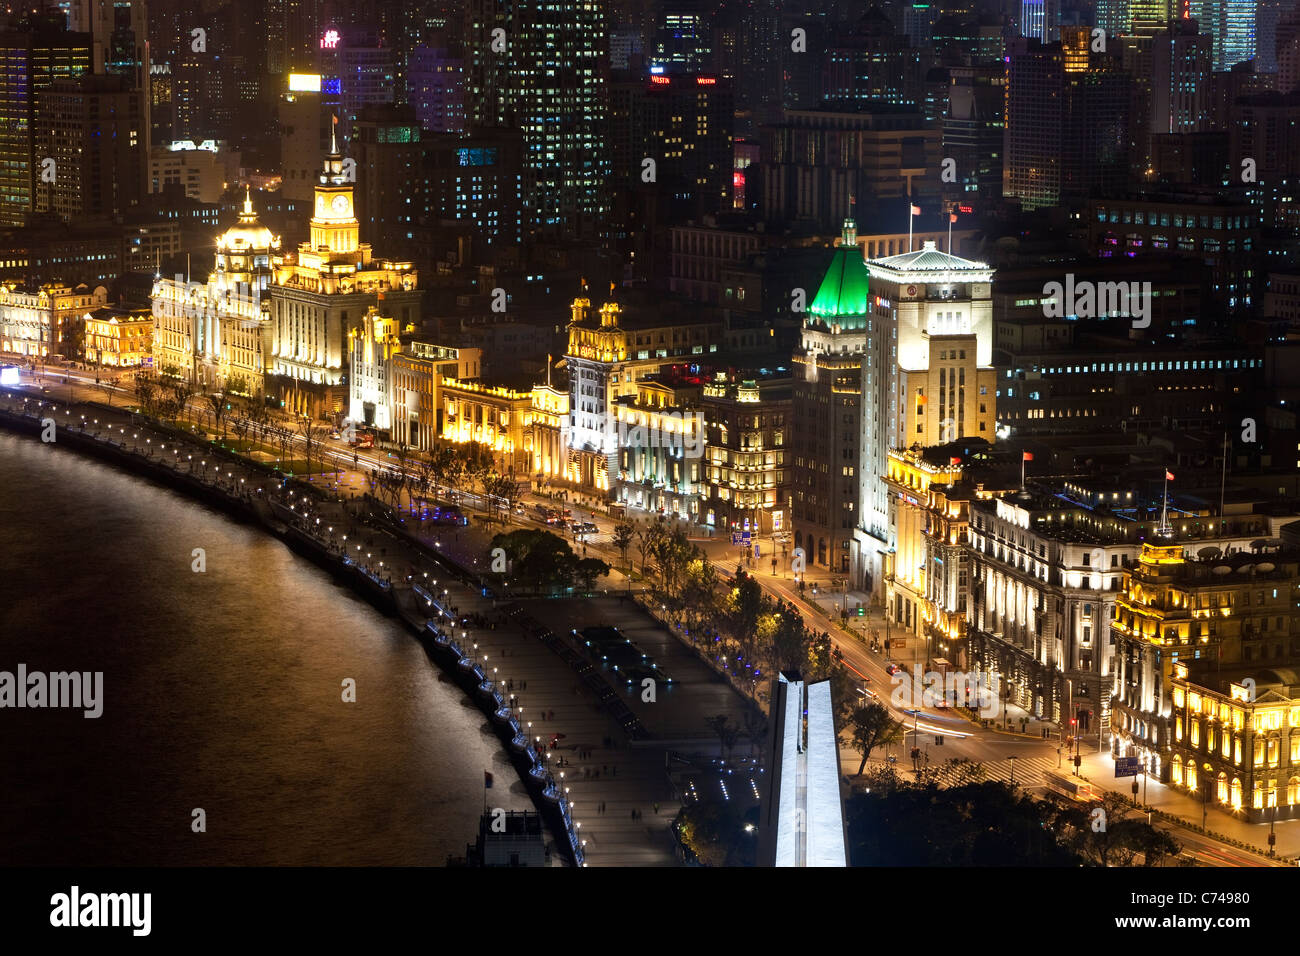 Shanghai night skyline (view along Huangpu River and the Bund), Shanghai, China Stock Photo